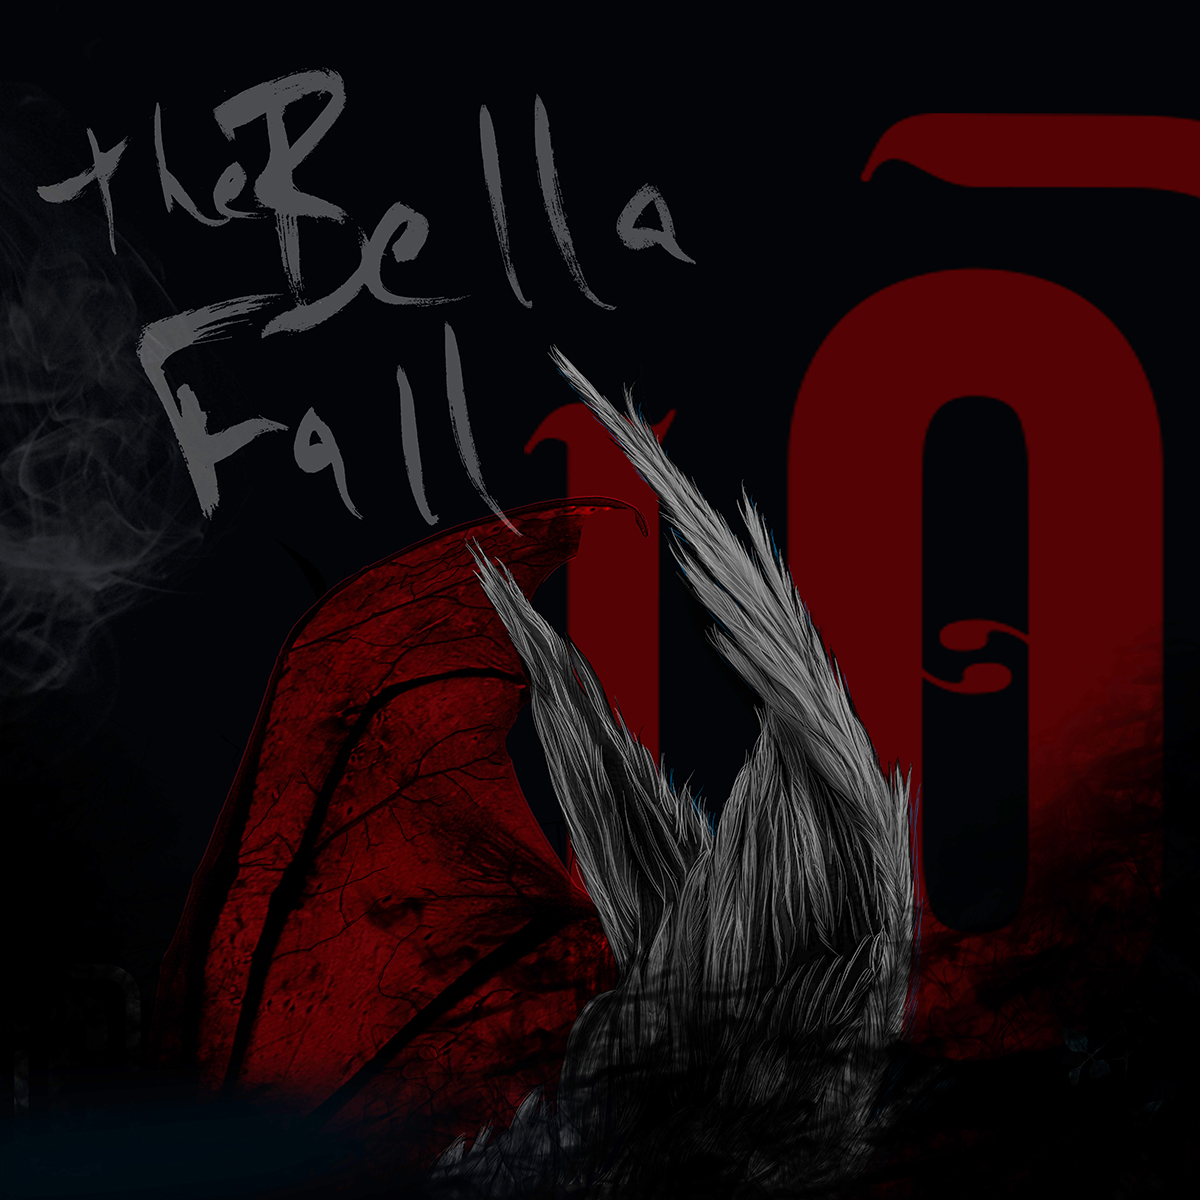 The Bella Fall